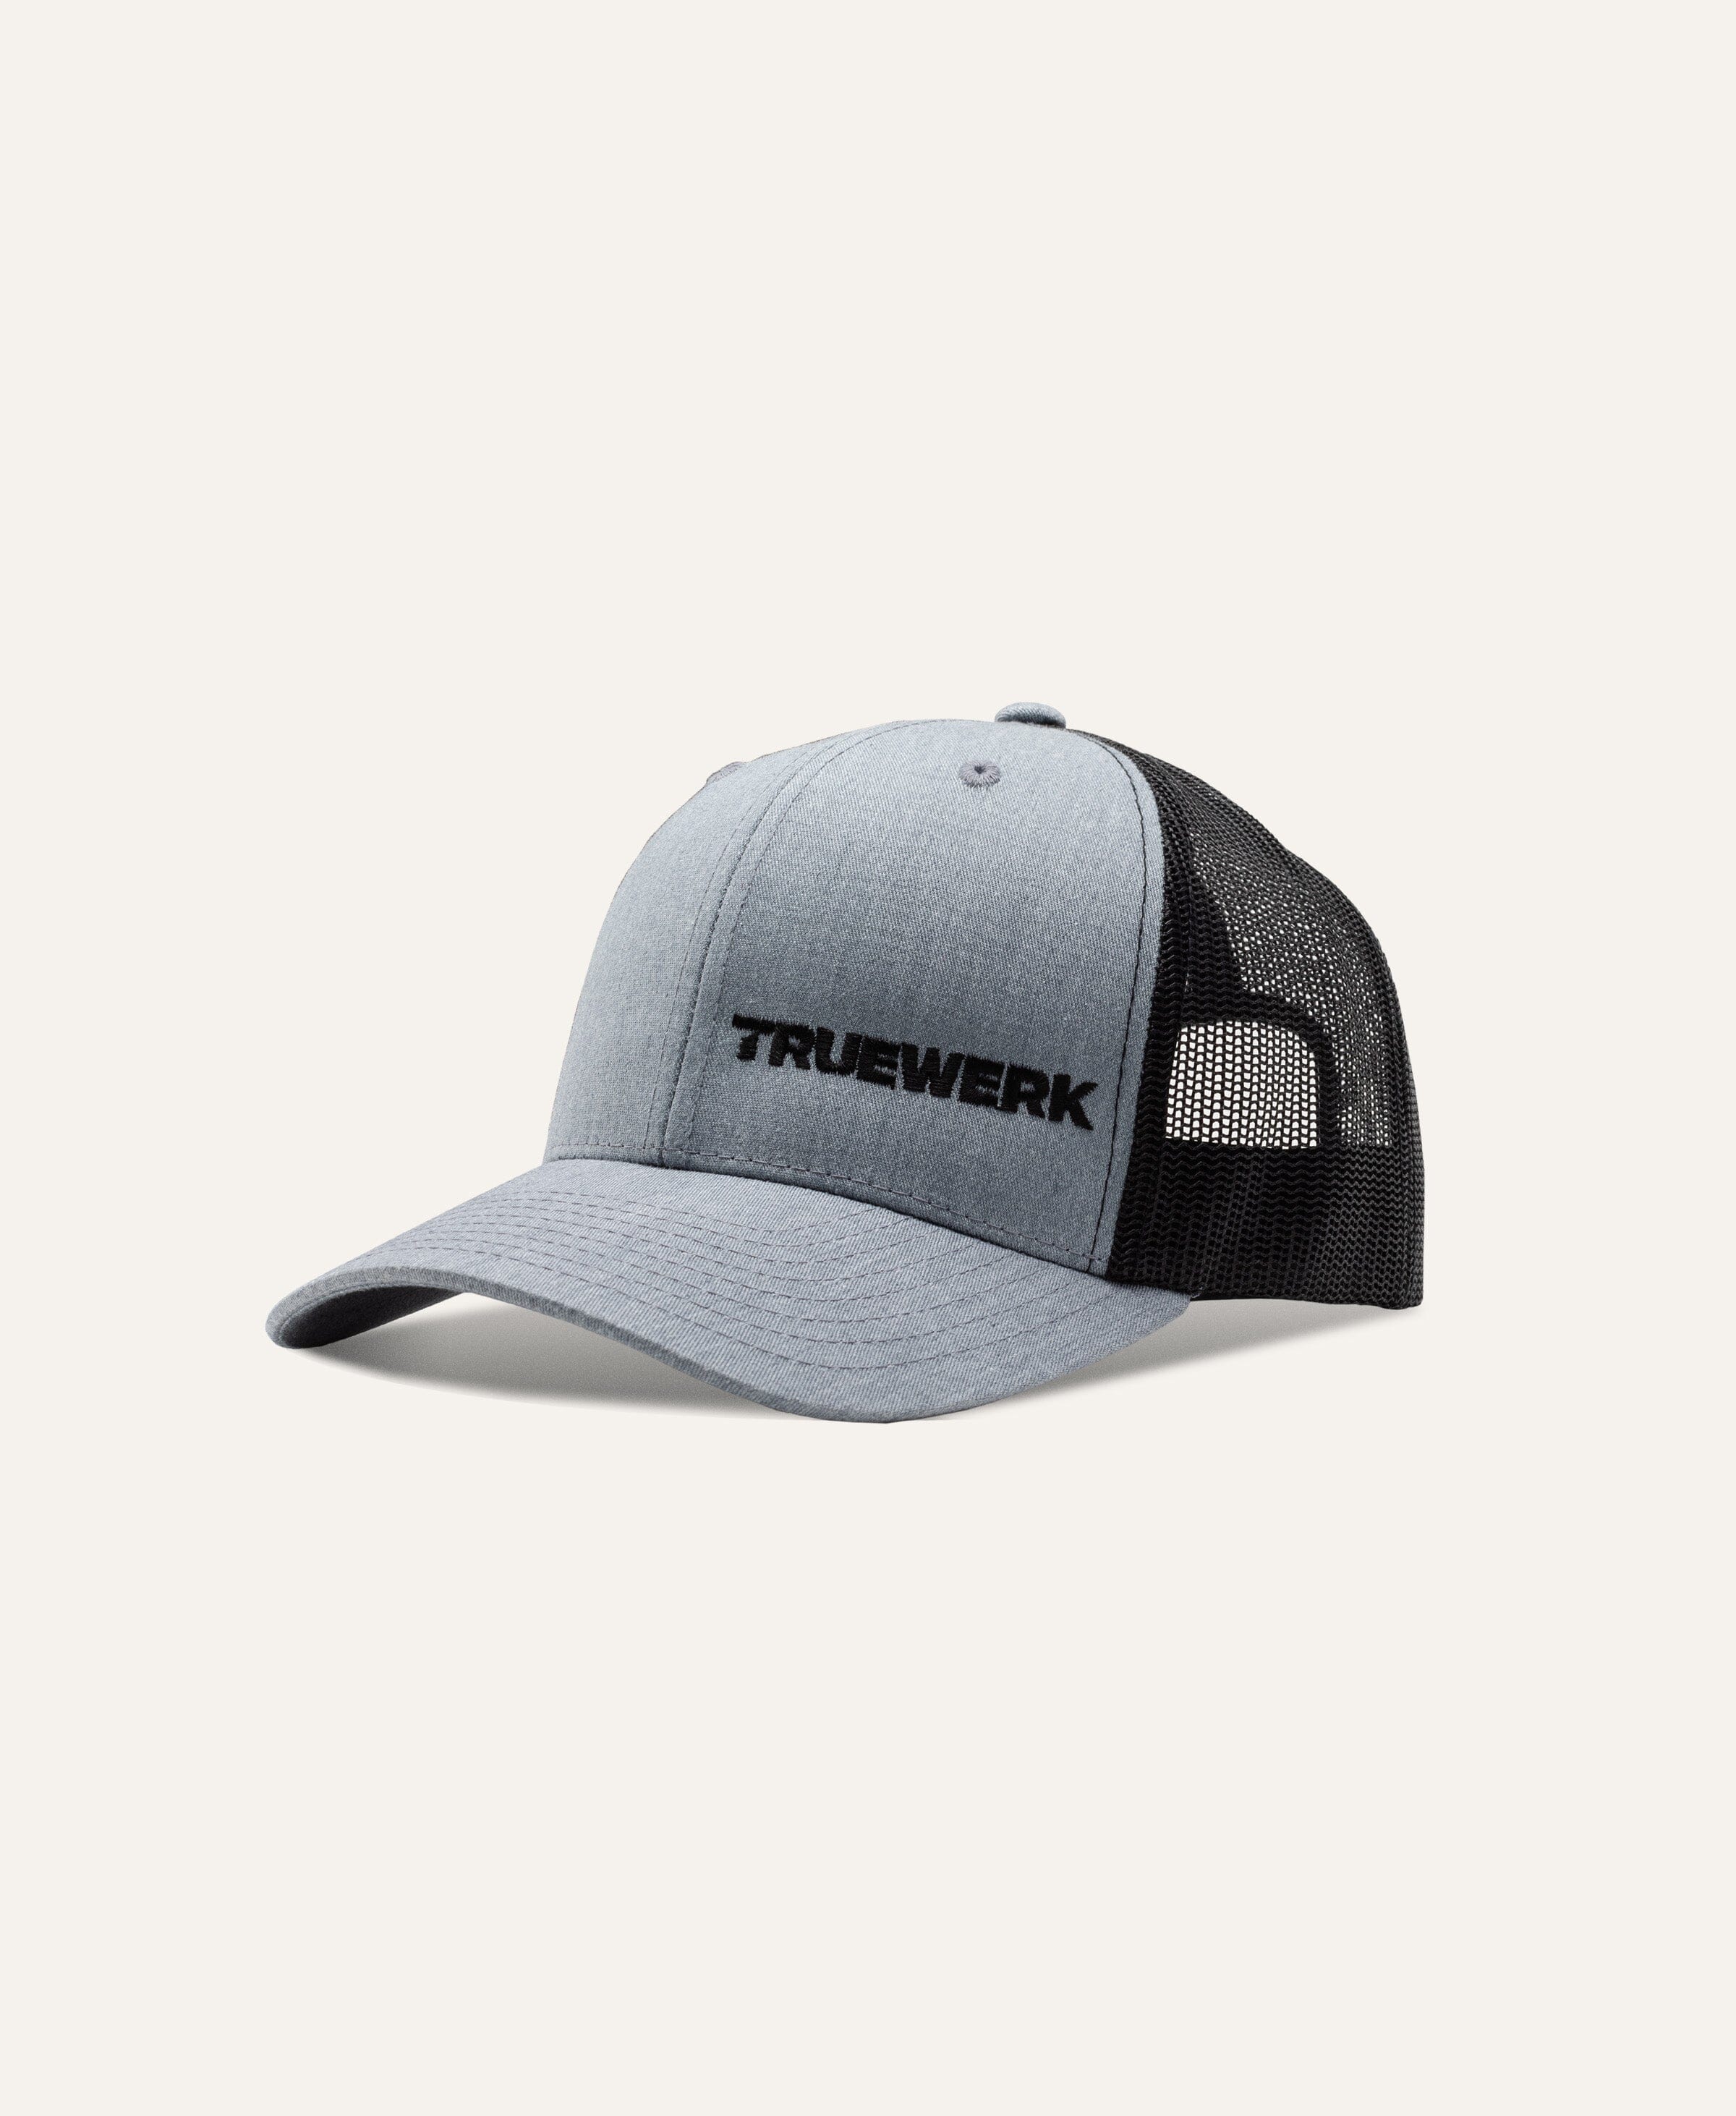 Two-Tone Mesh Back Trucker Hat | Shop Online at Truewerk